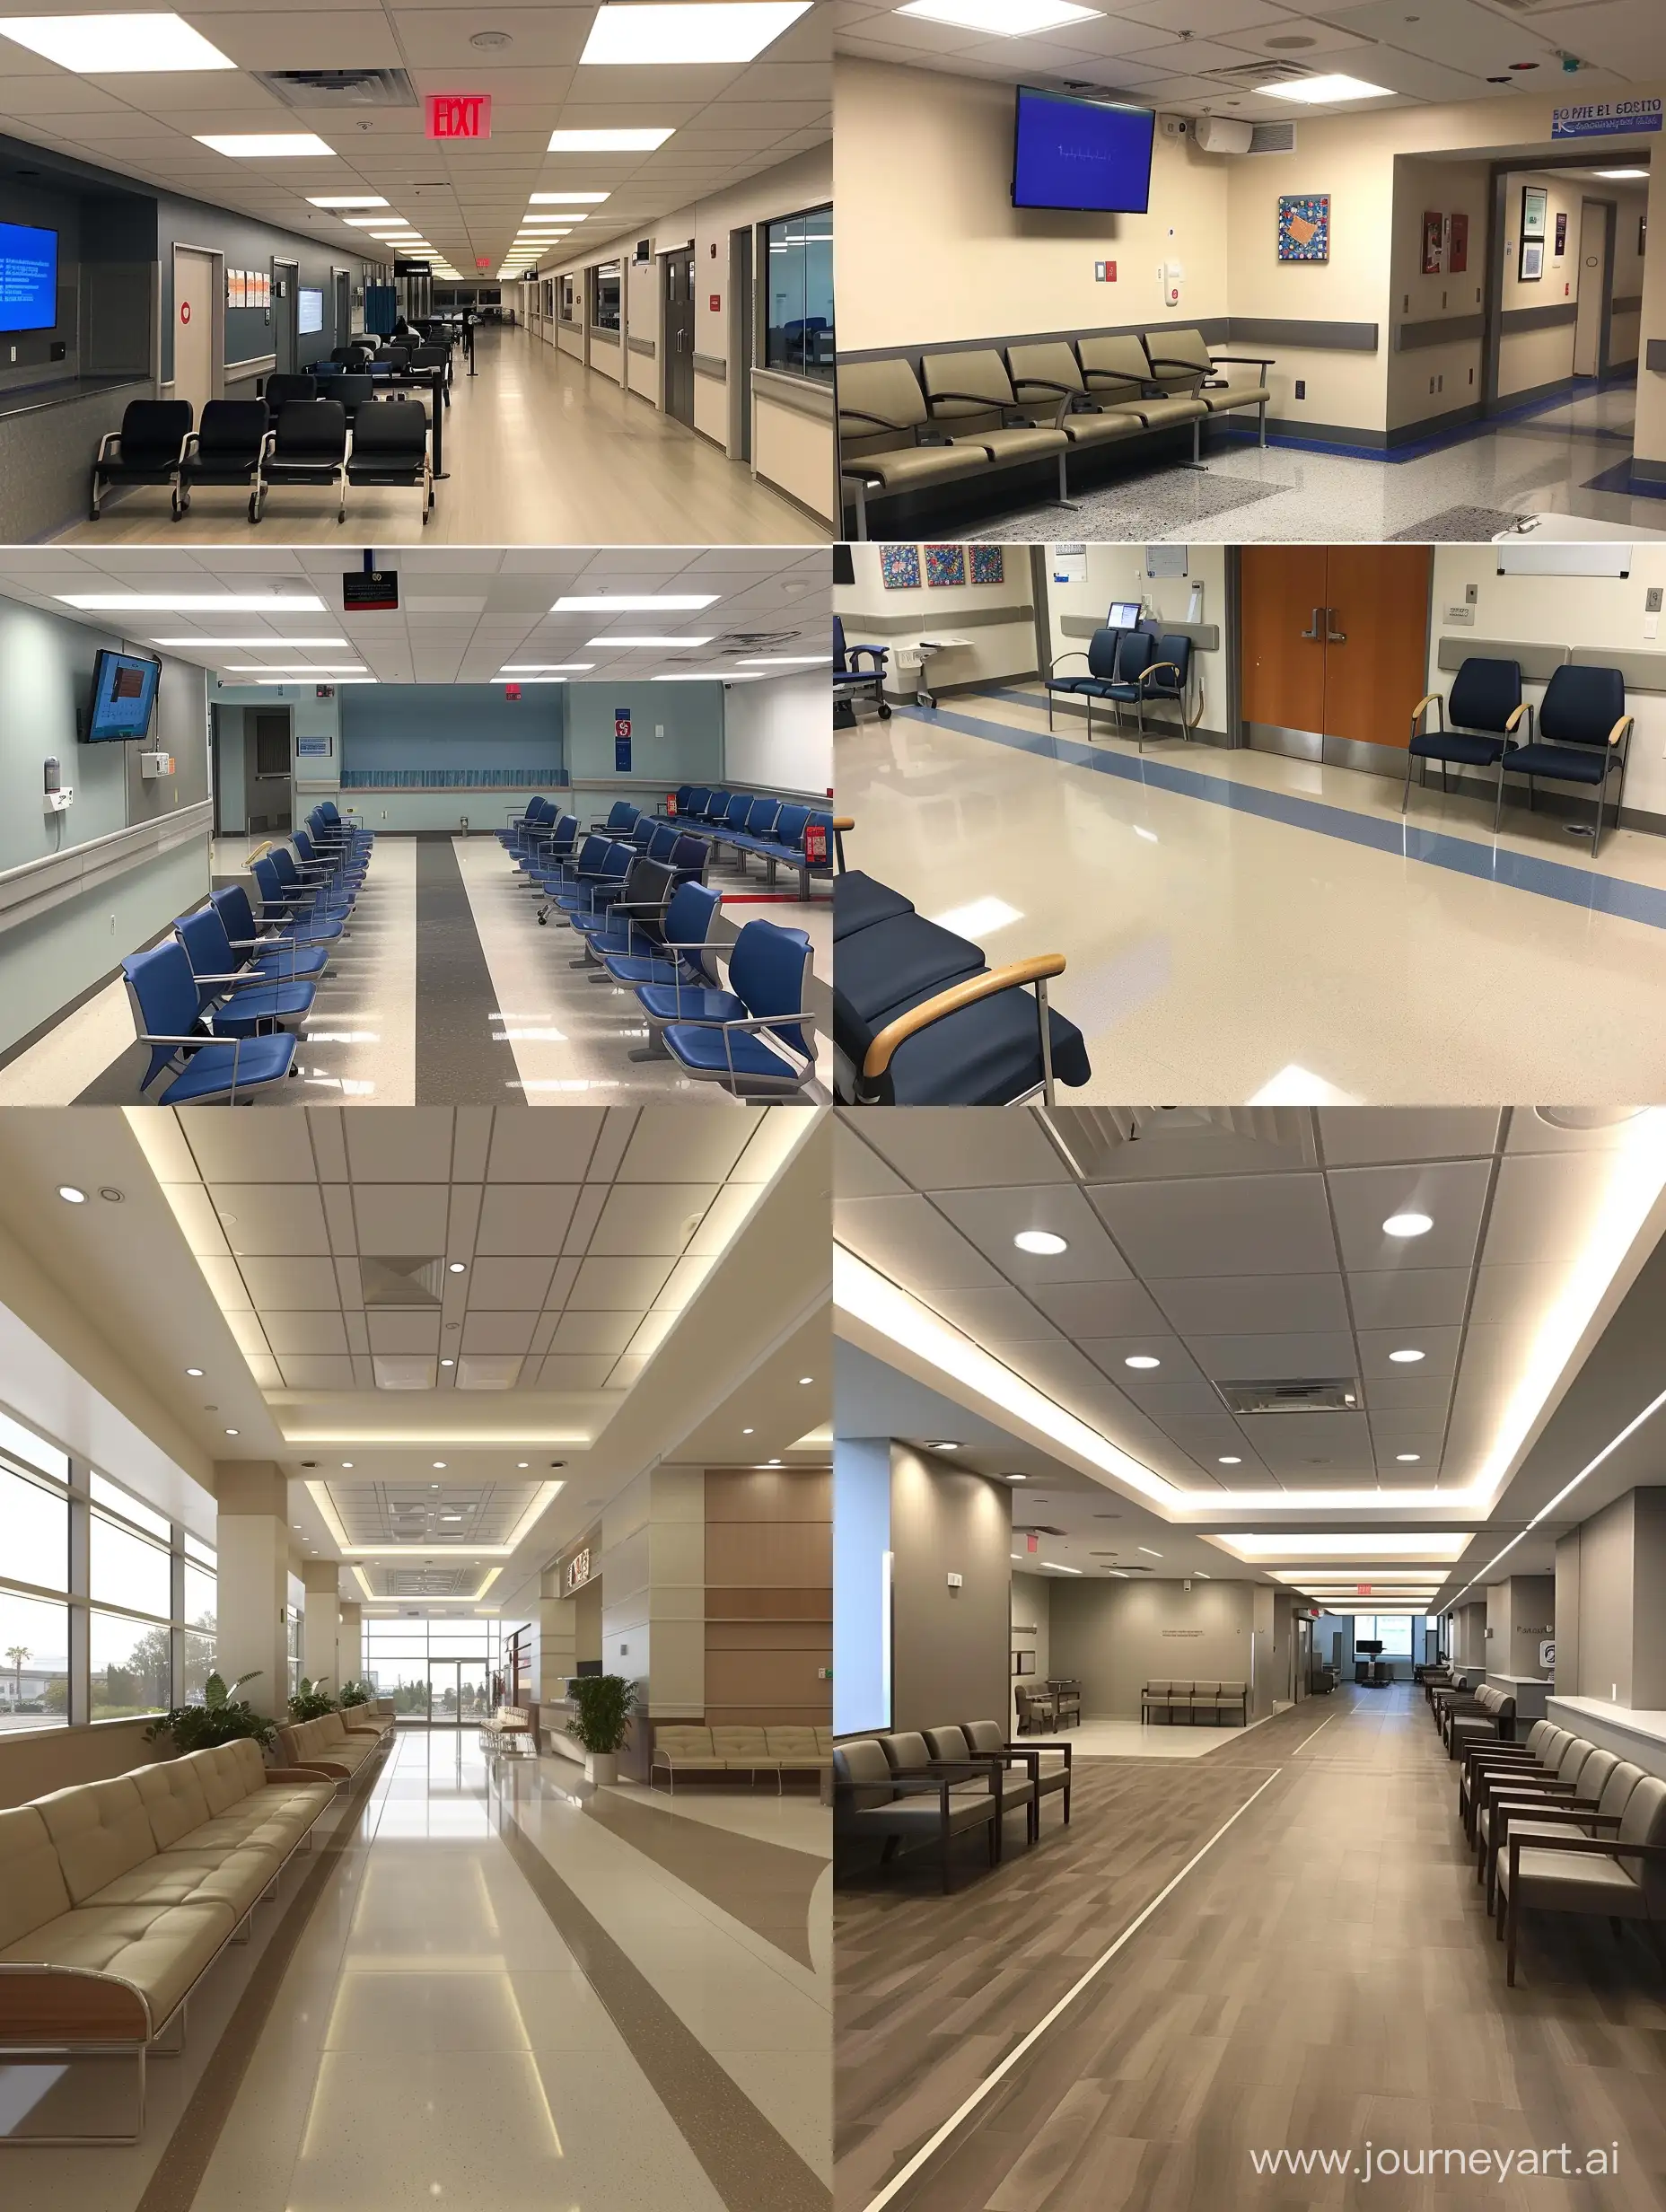 Modern-Hospital-Waiting-Room-Interior-with-People-Reddit-2018